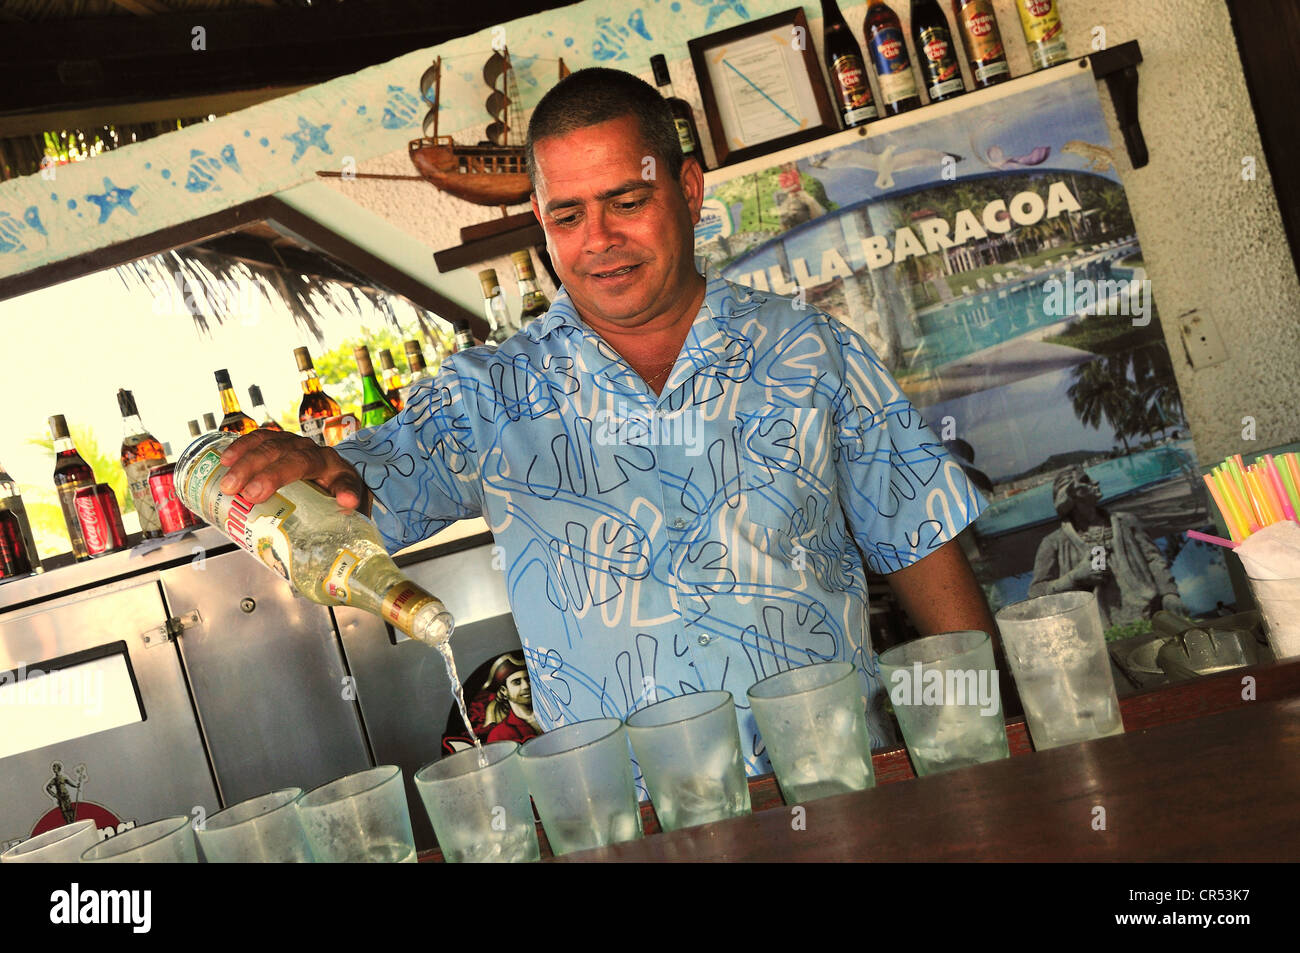 Bartenders mixing mojito cocktails, Baracoa, Cuba, Caribbean Stock Photo